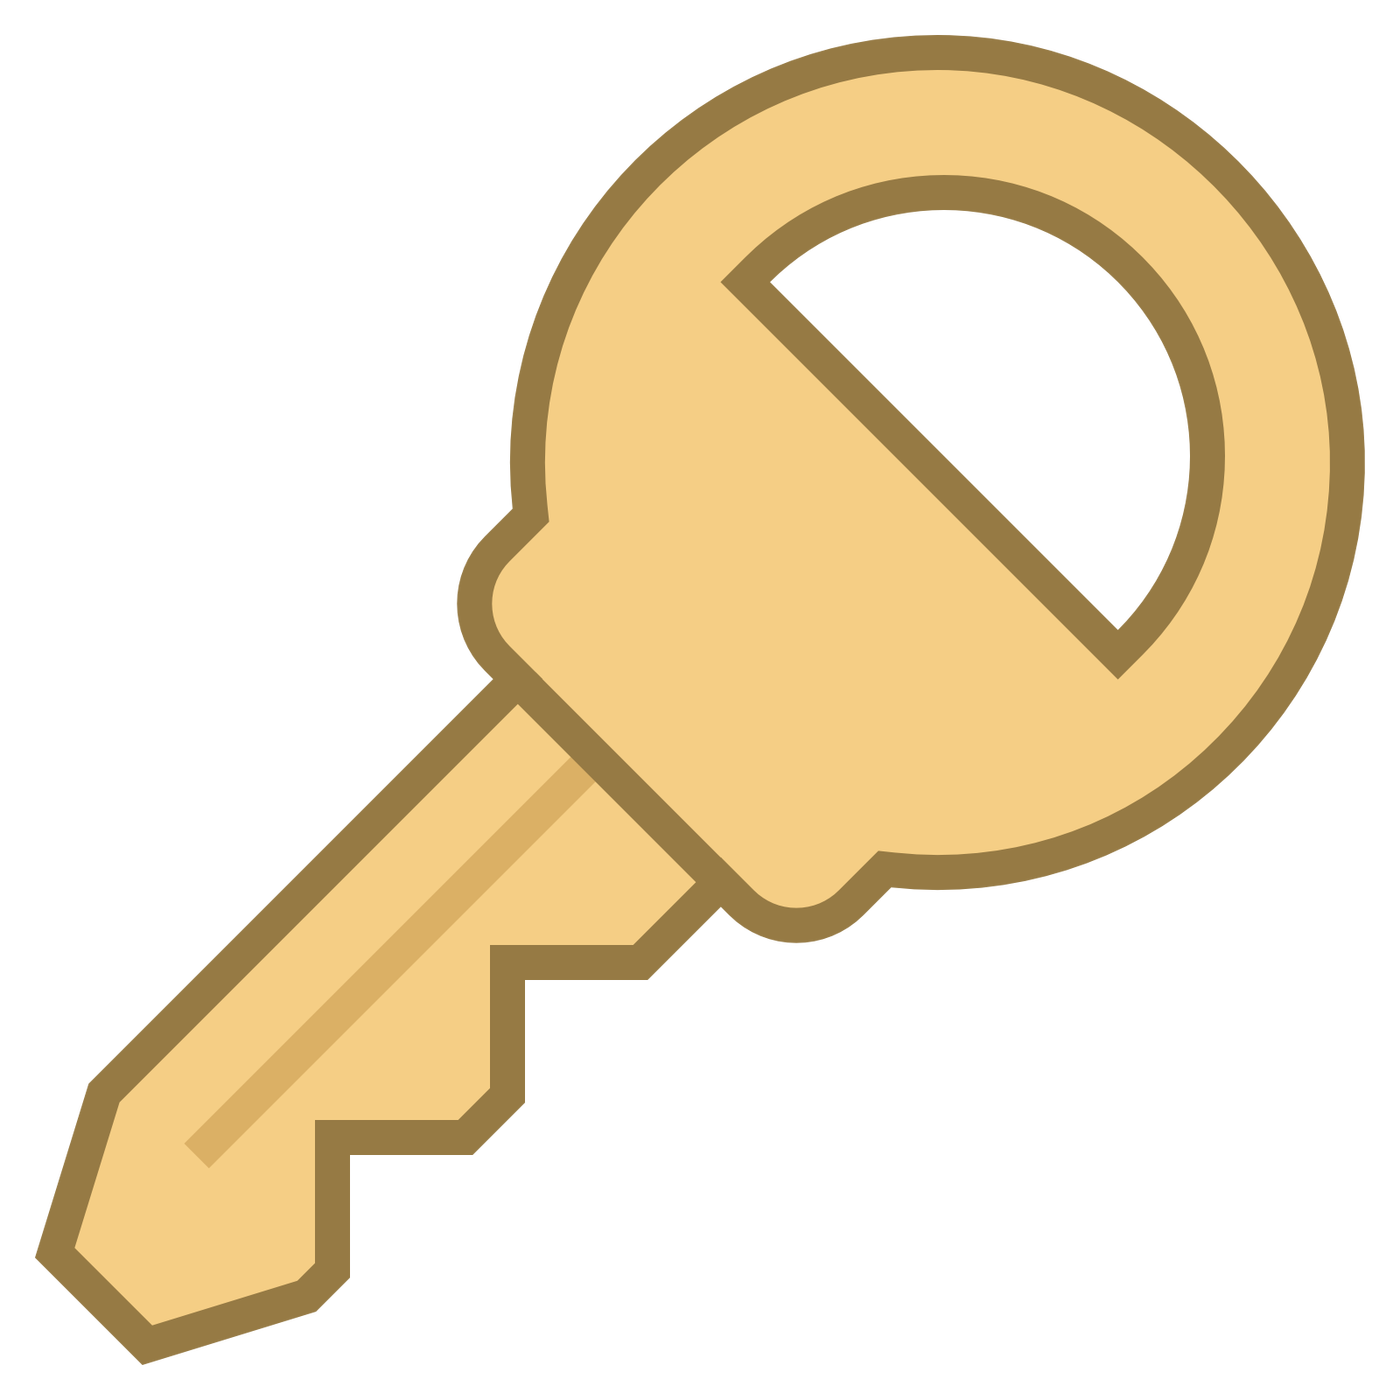 key clipart orange key